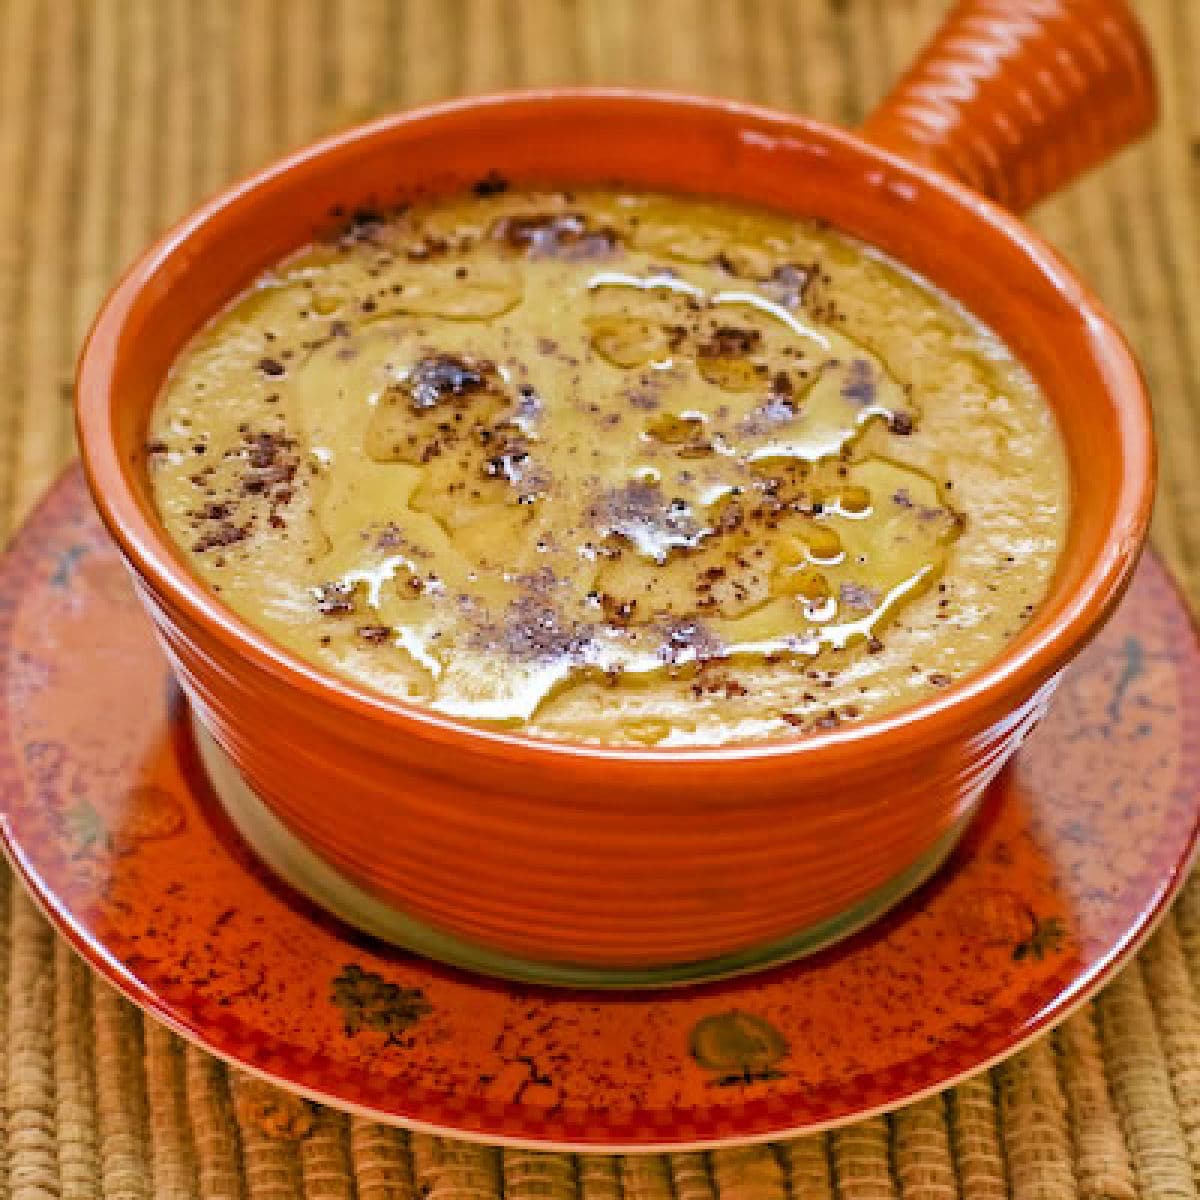 Square image of Garbanzo Bean Soup in orange bowl on decorative plate.